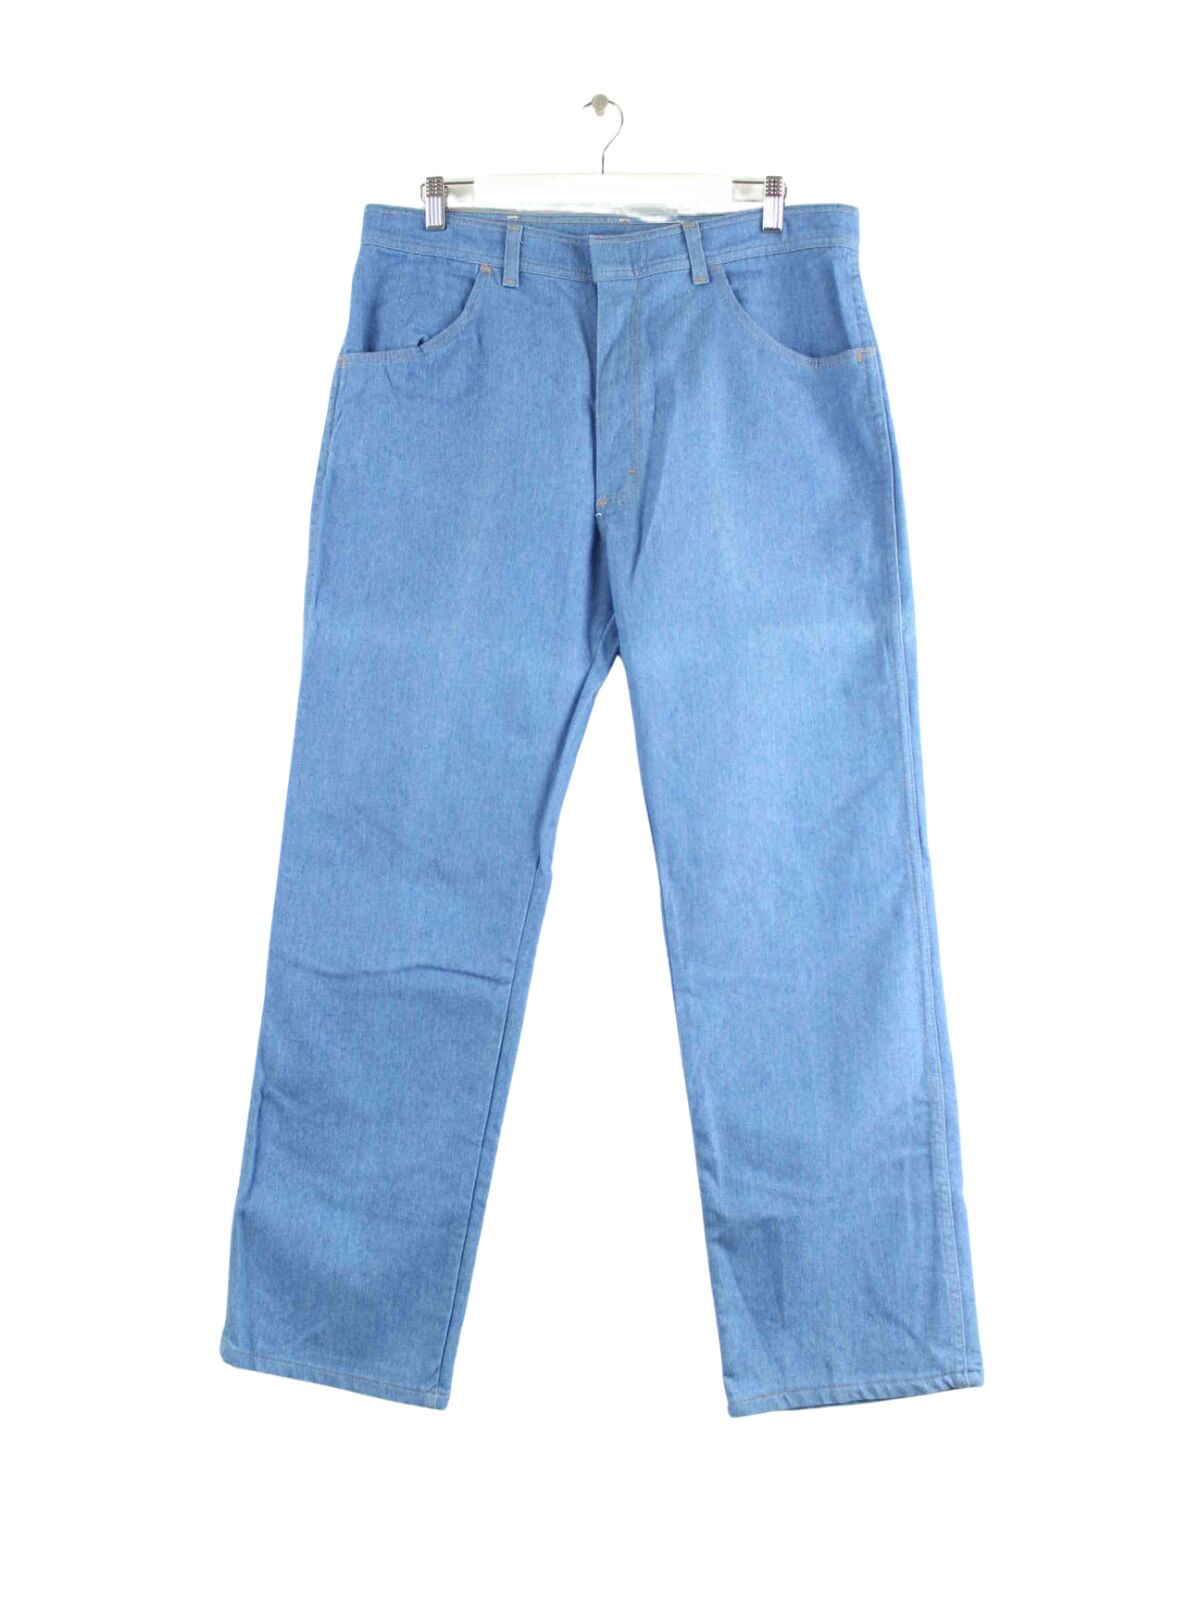 Wrangler 00s Jeans Blau W23 L30 (front image)